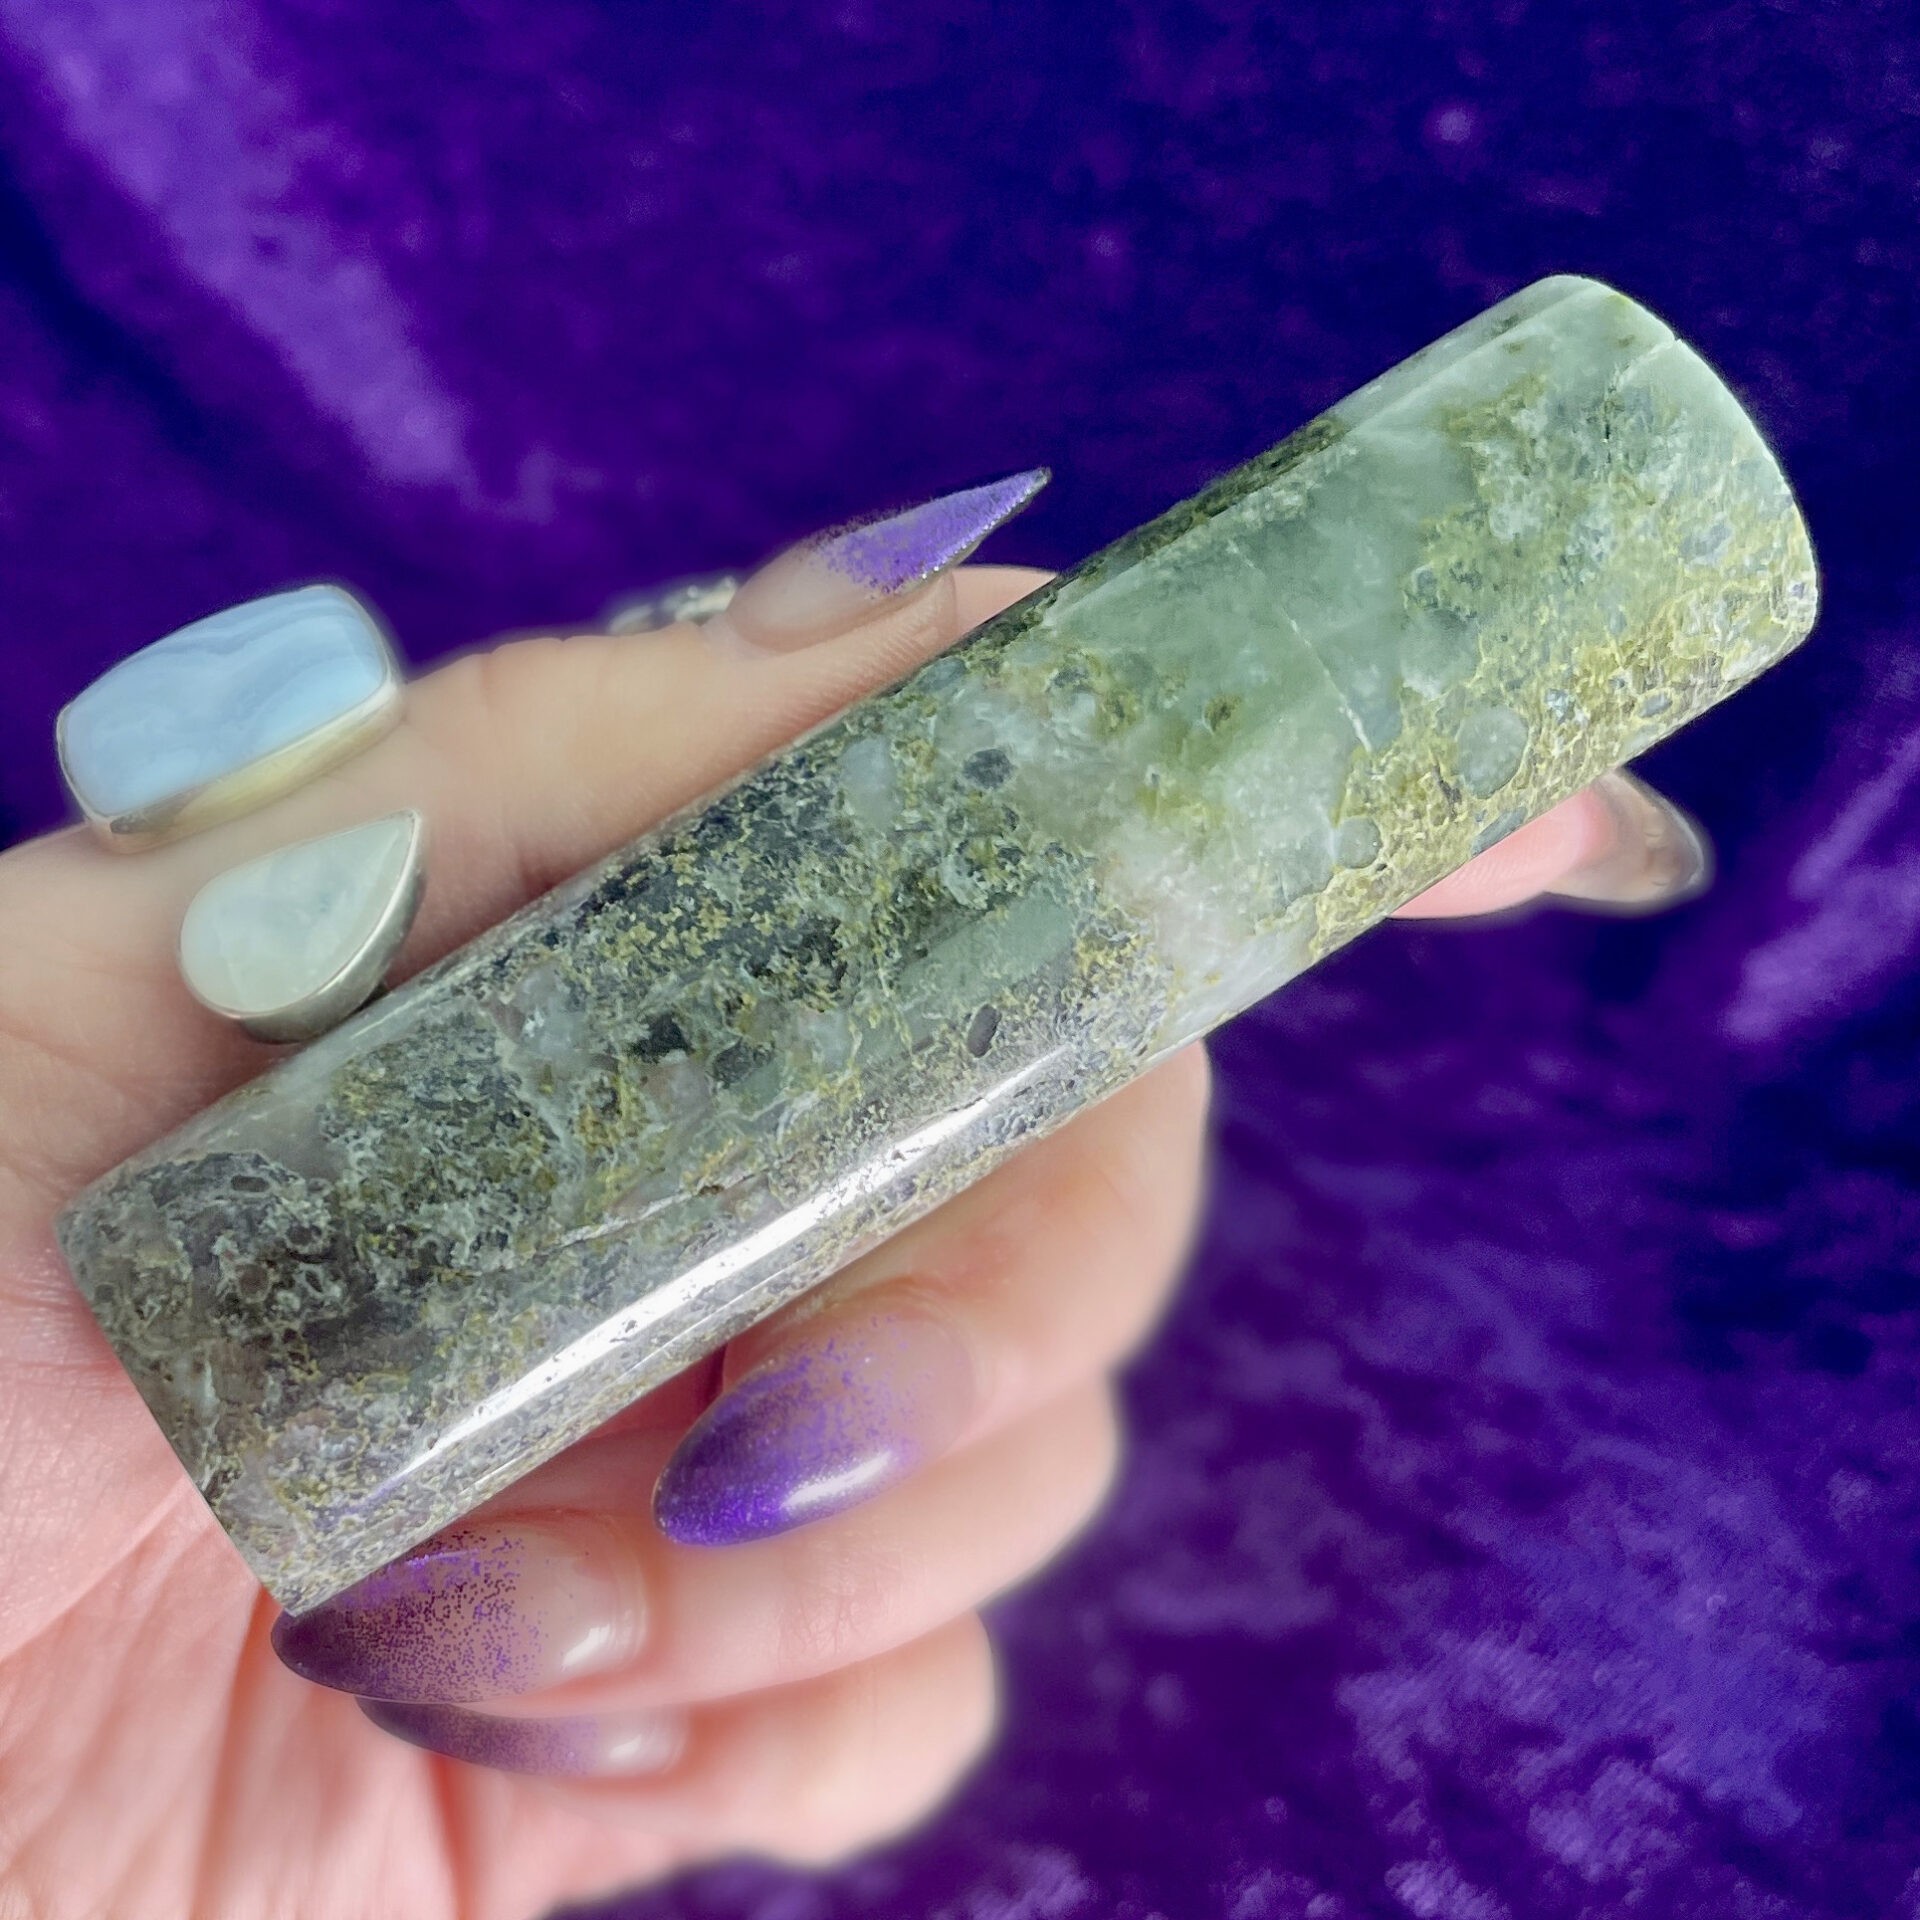 Sage Goddess Misfit Minerals: Compassion Stone Harmonizer